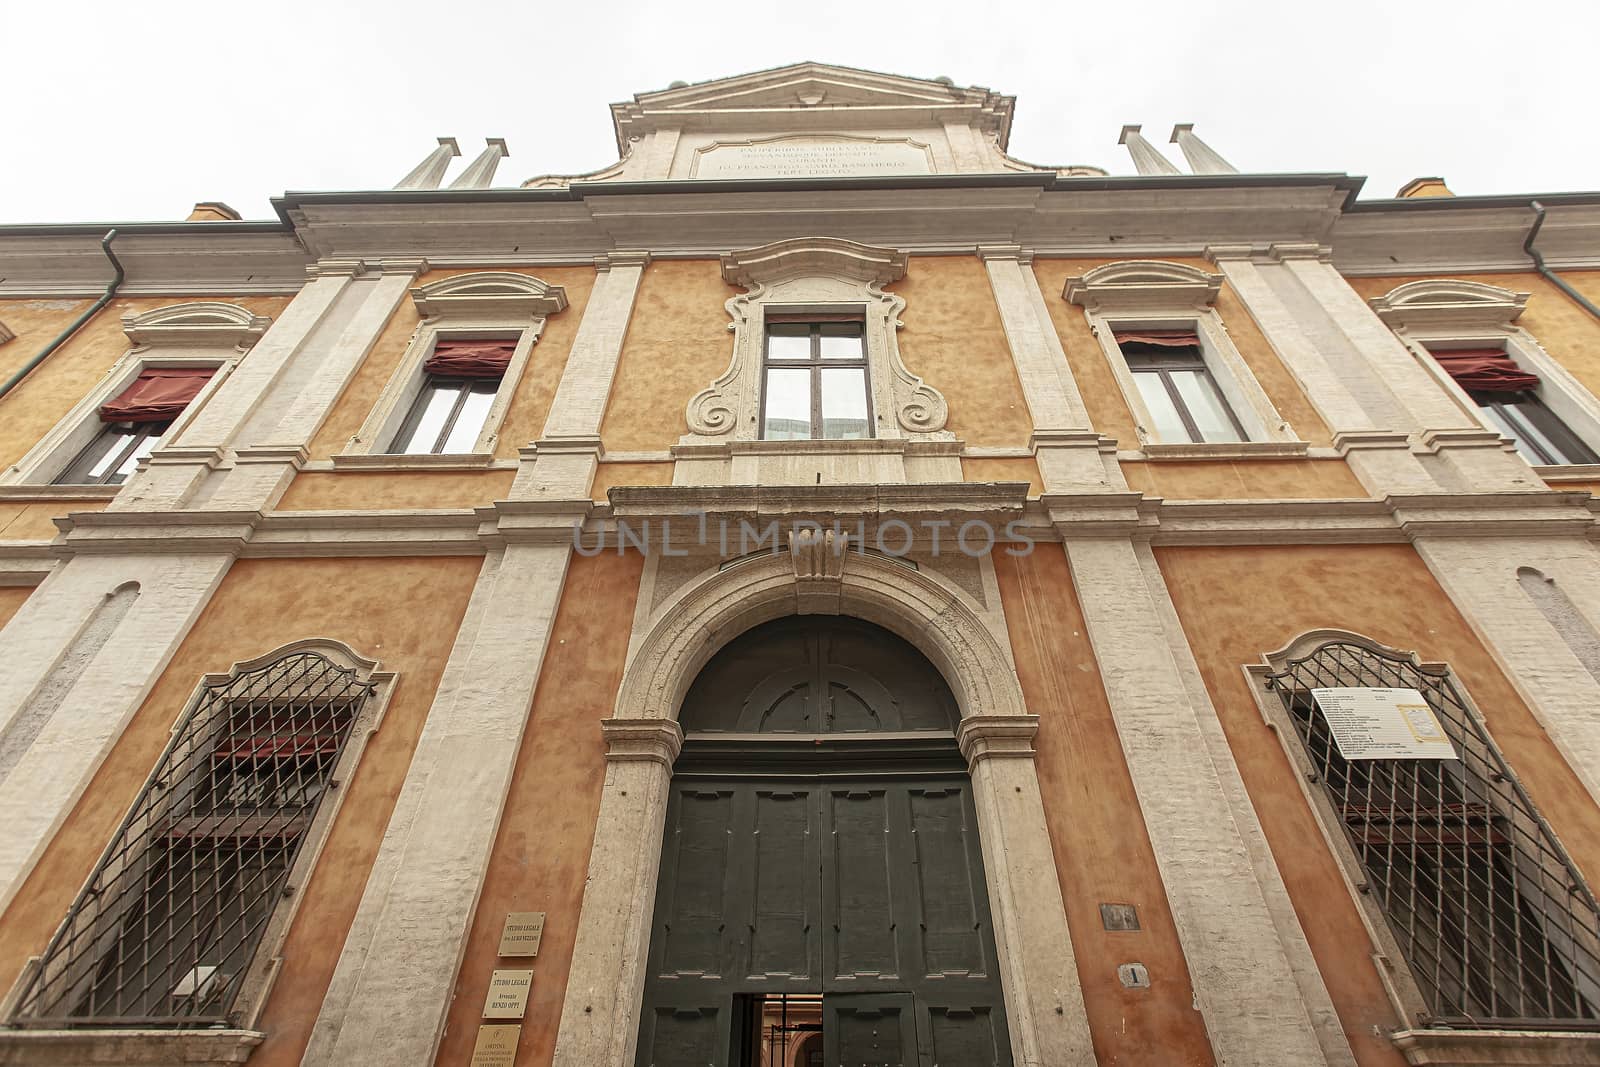 A church in Ferrara in Italy by pippocarlot